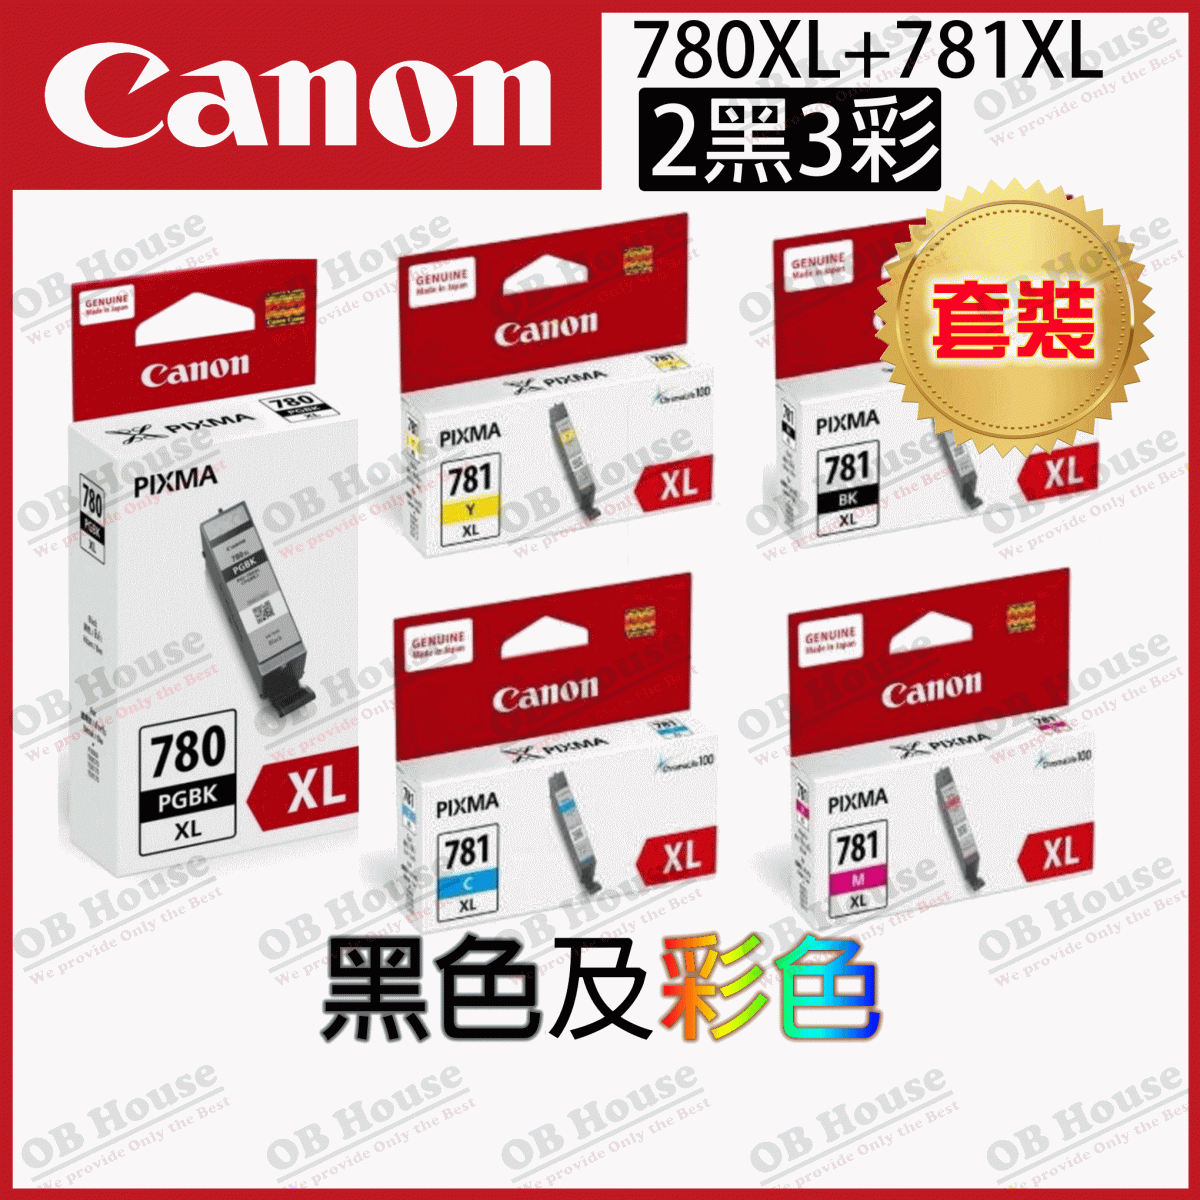 [COMBO] PGI-780XL High Capacity Ink Cartridge - Includes : PGI-780XL, CLI-781XLBK, CLI-781XLC, CLI-781XLM, CLI-781XLY